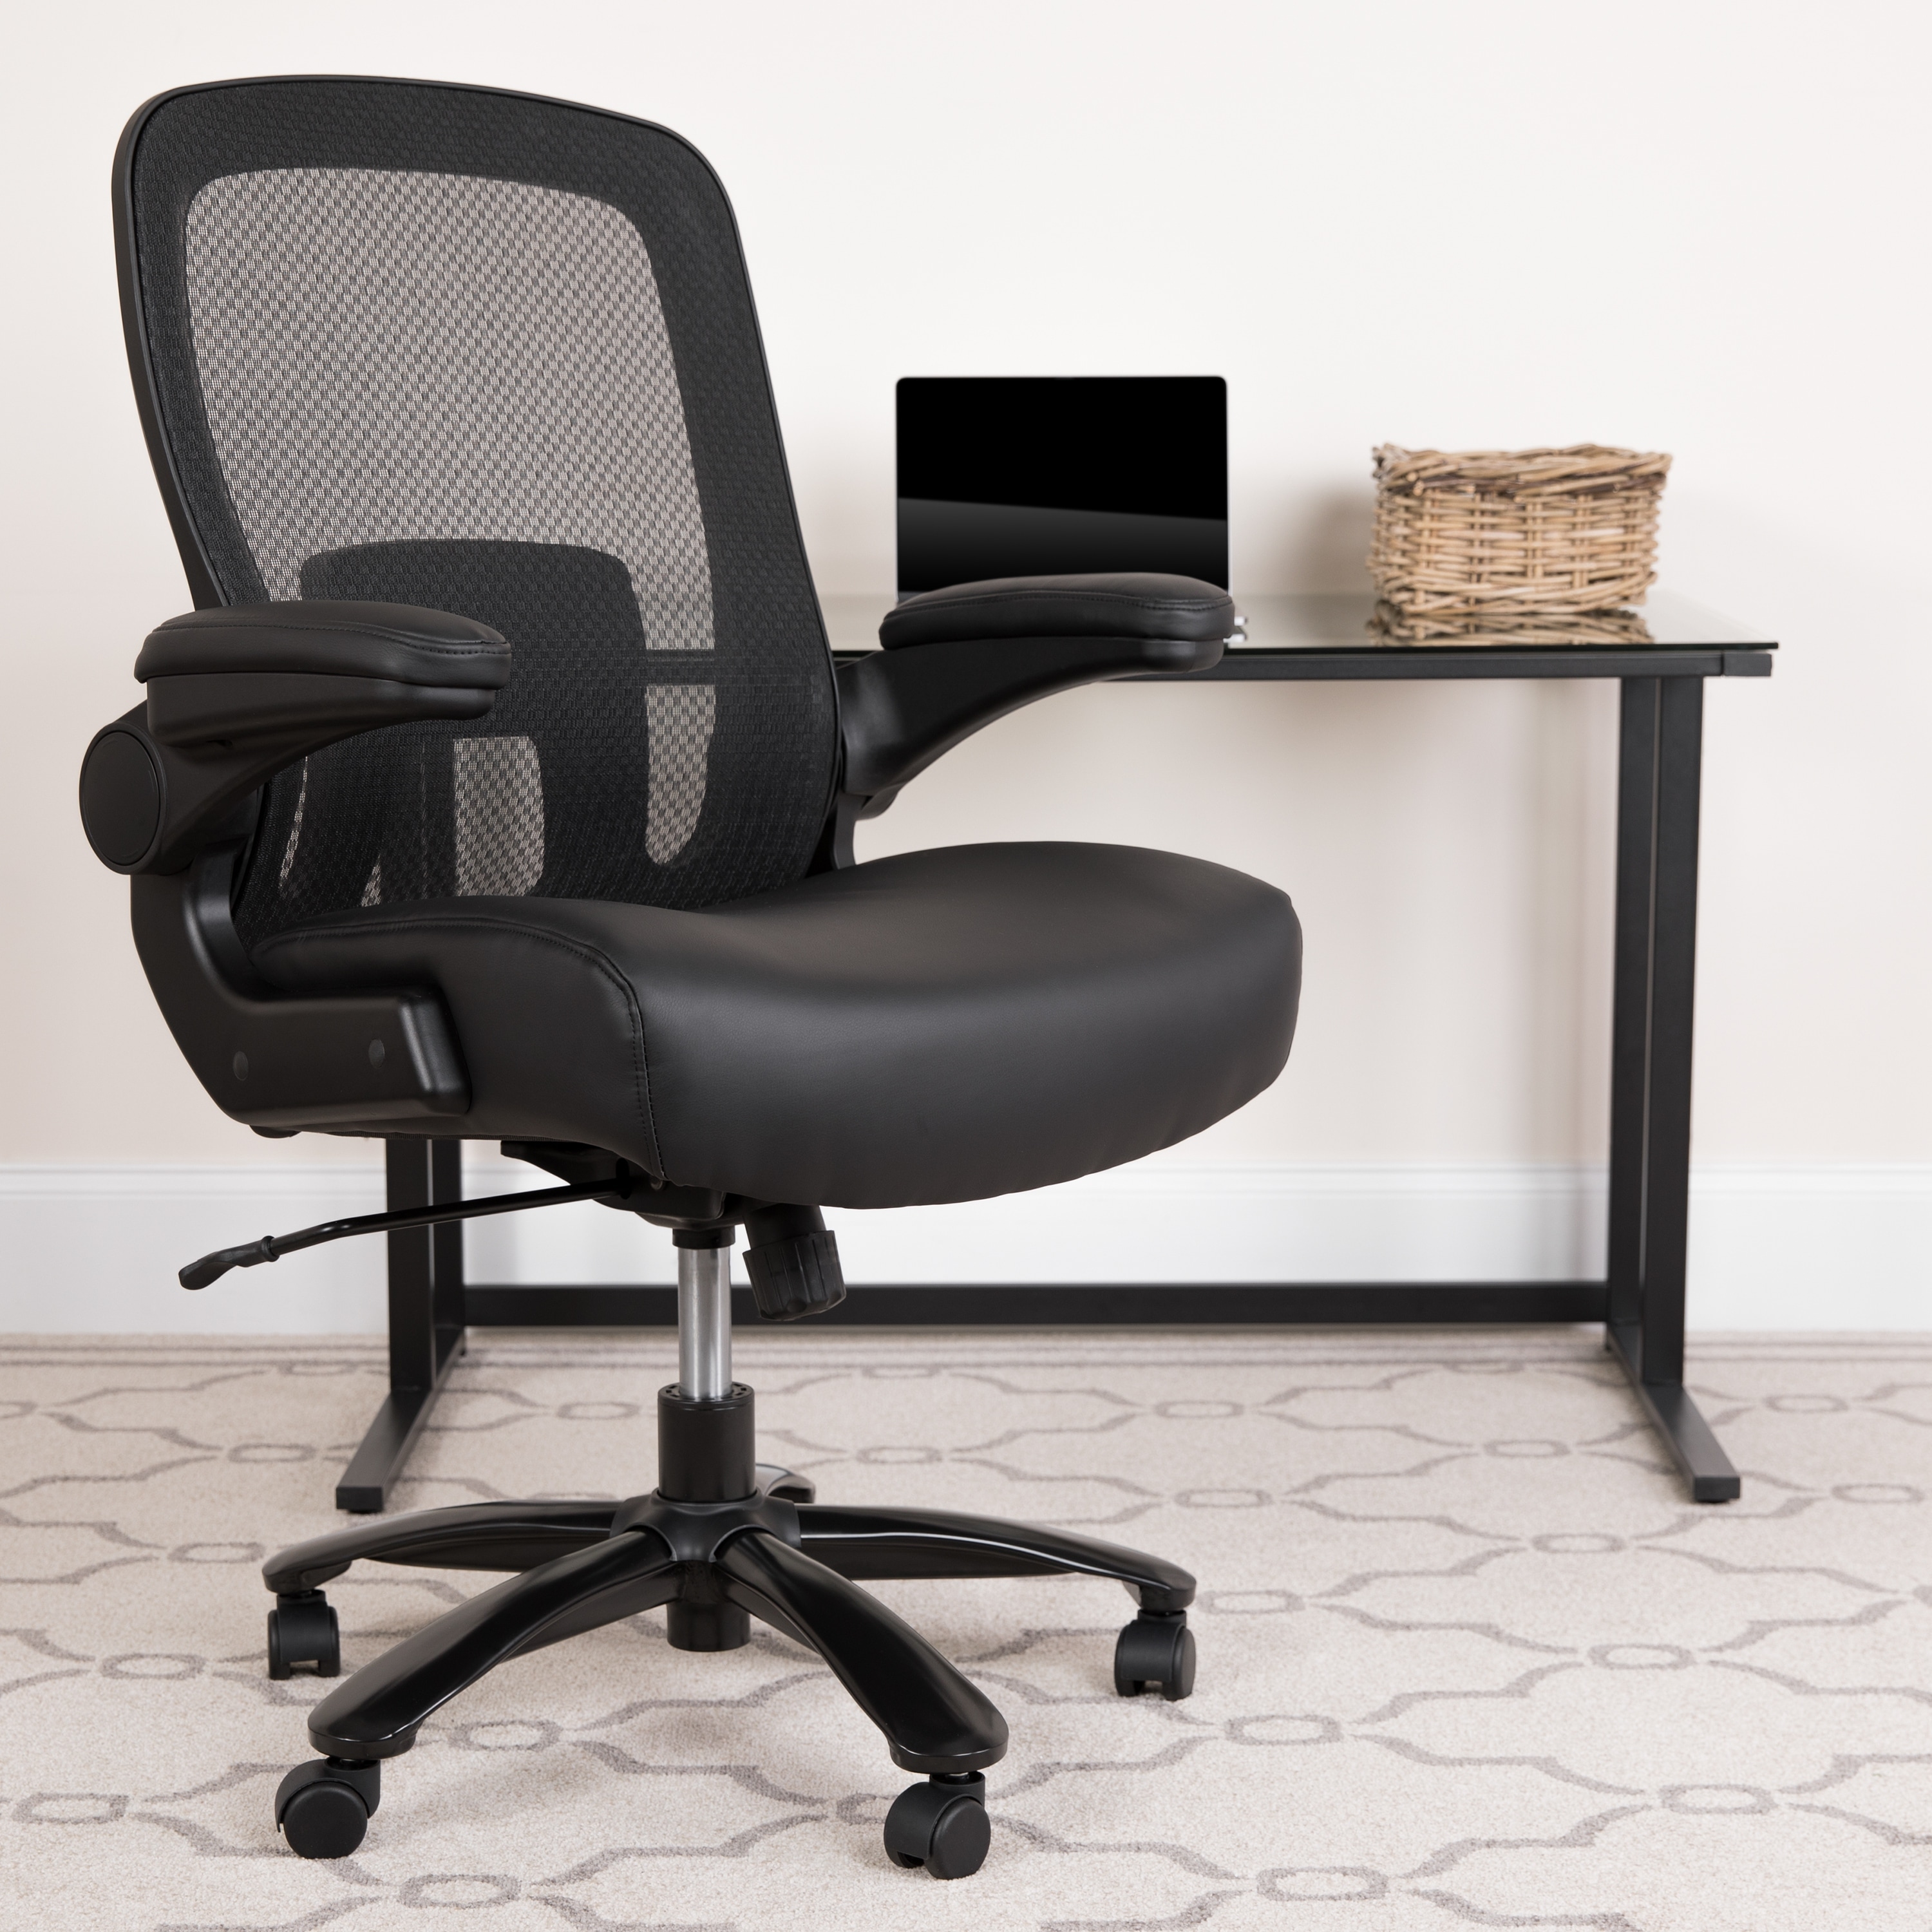  Big and Tall Office Chair 500lbs - Ergonomic Mesh